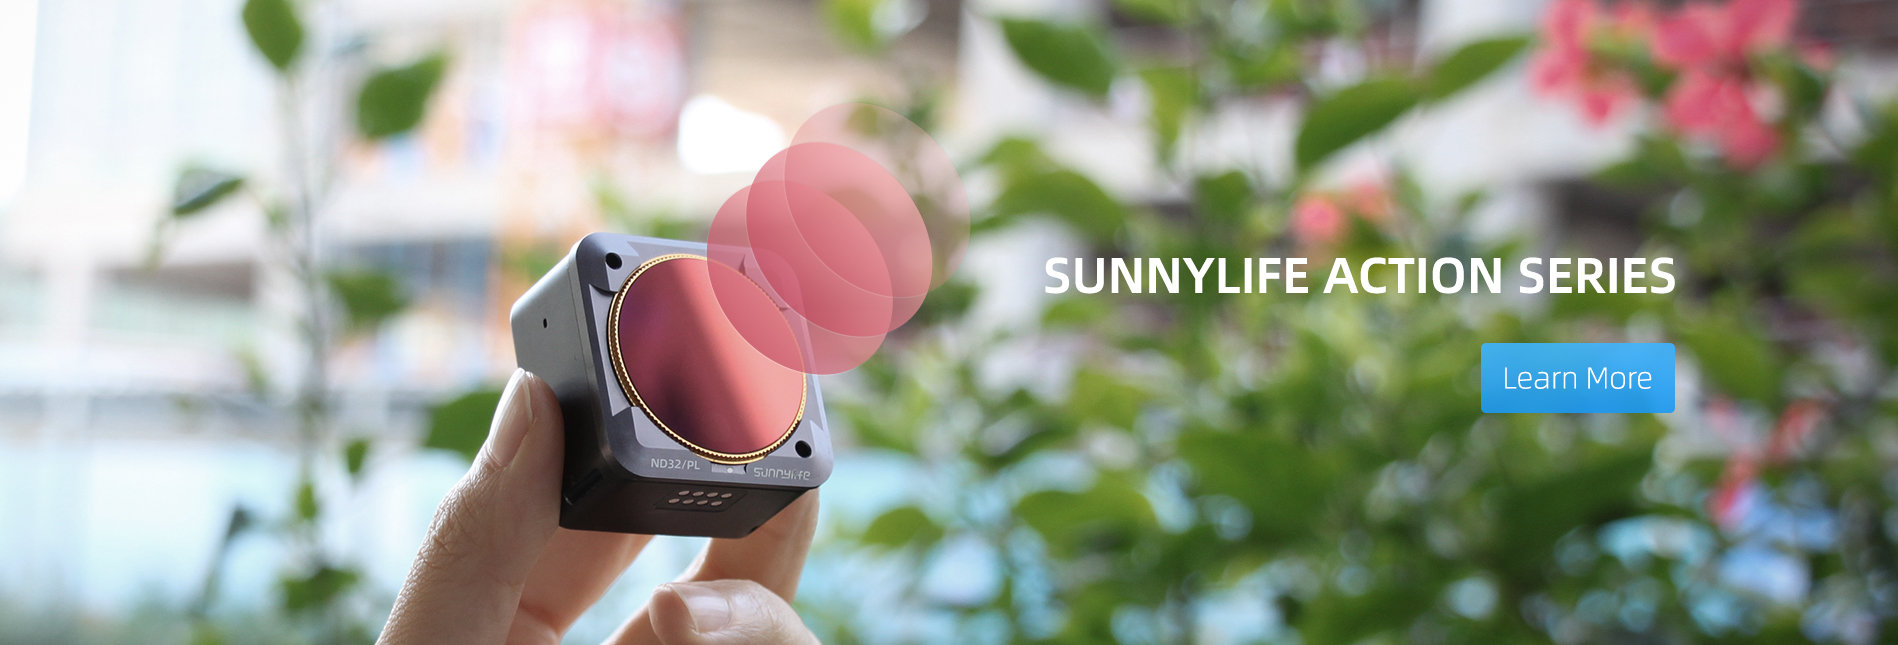 Bandeau Sunnylife avec fixation rotative pour caméra embarquée